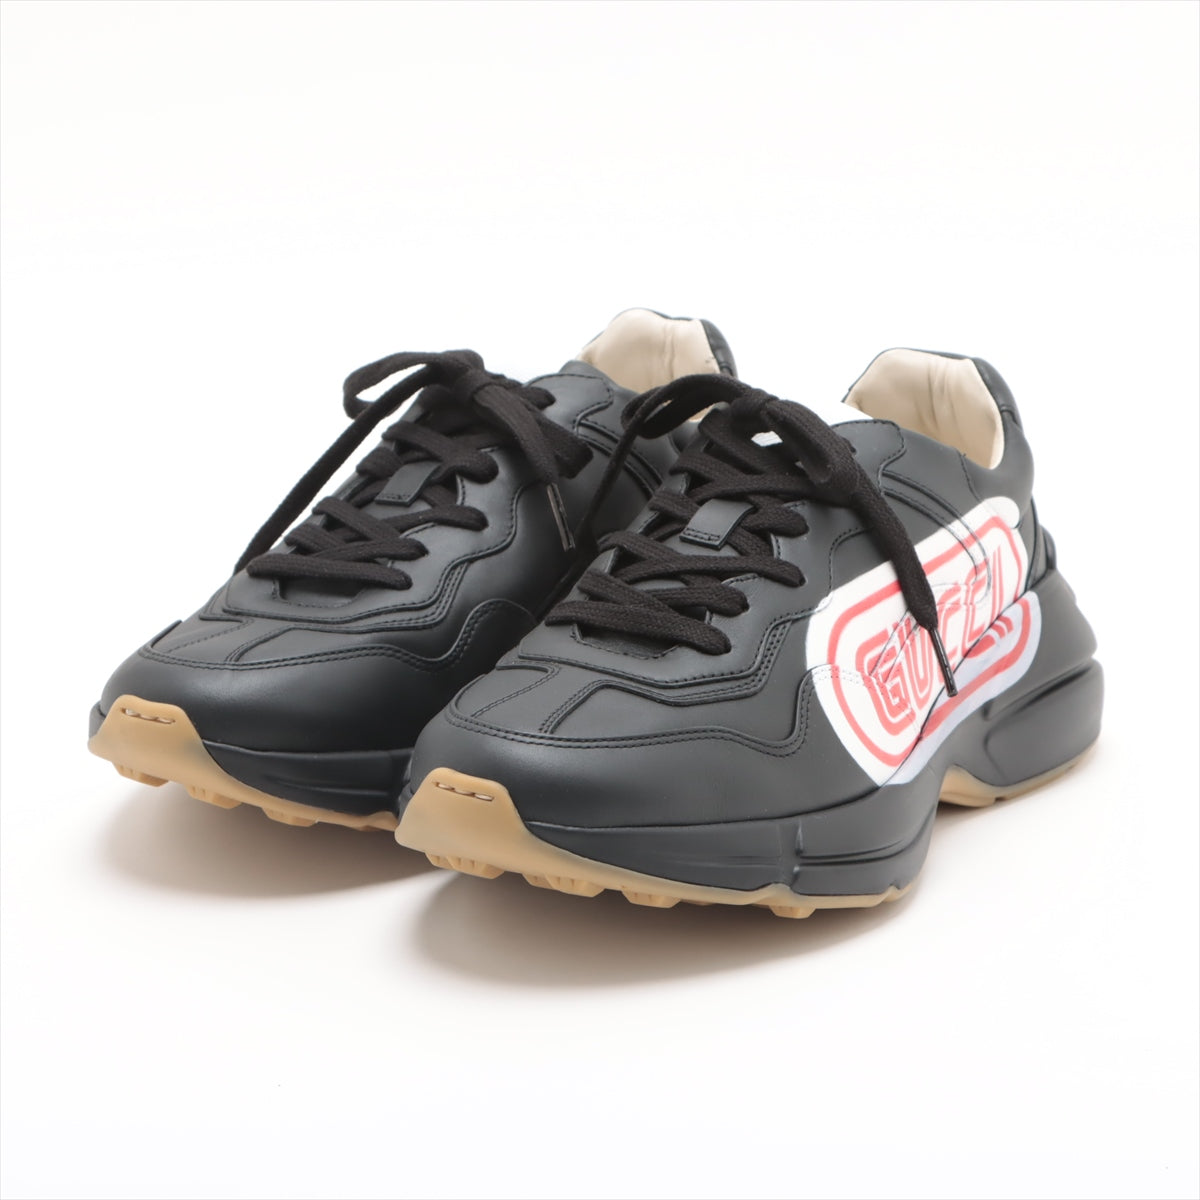 Gucci Righton Leather Sneakers 6 1/2 Men's Black 523609